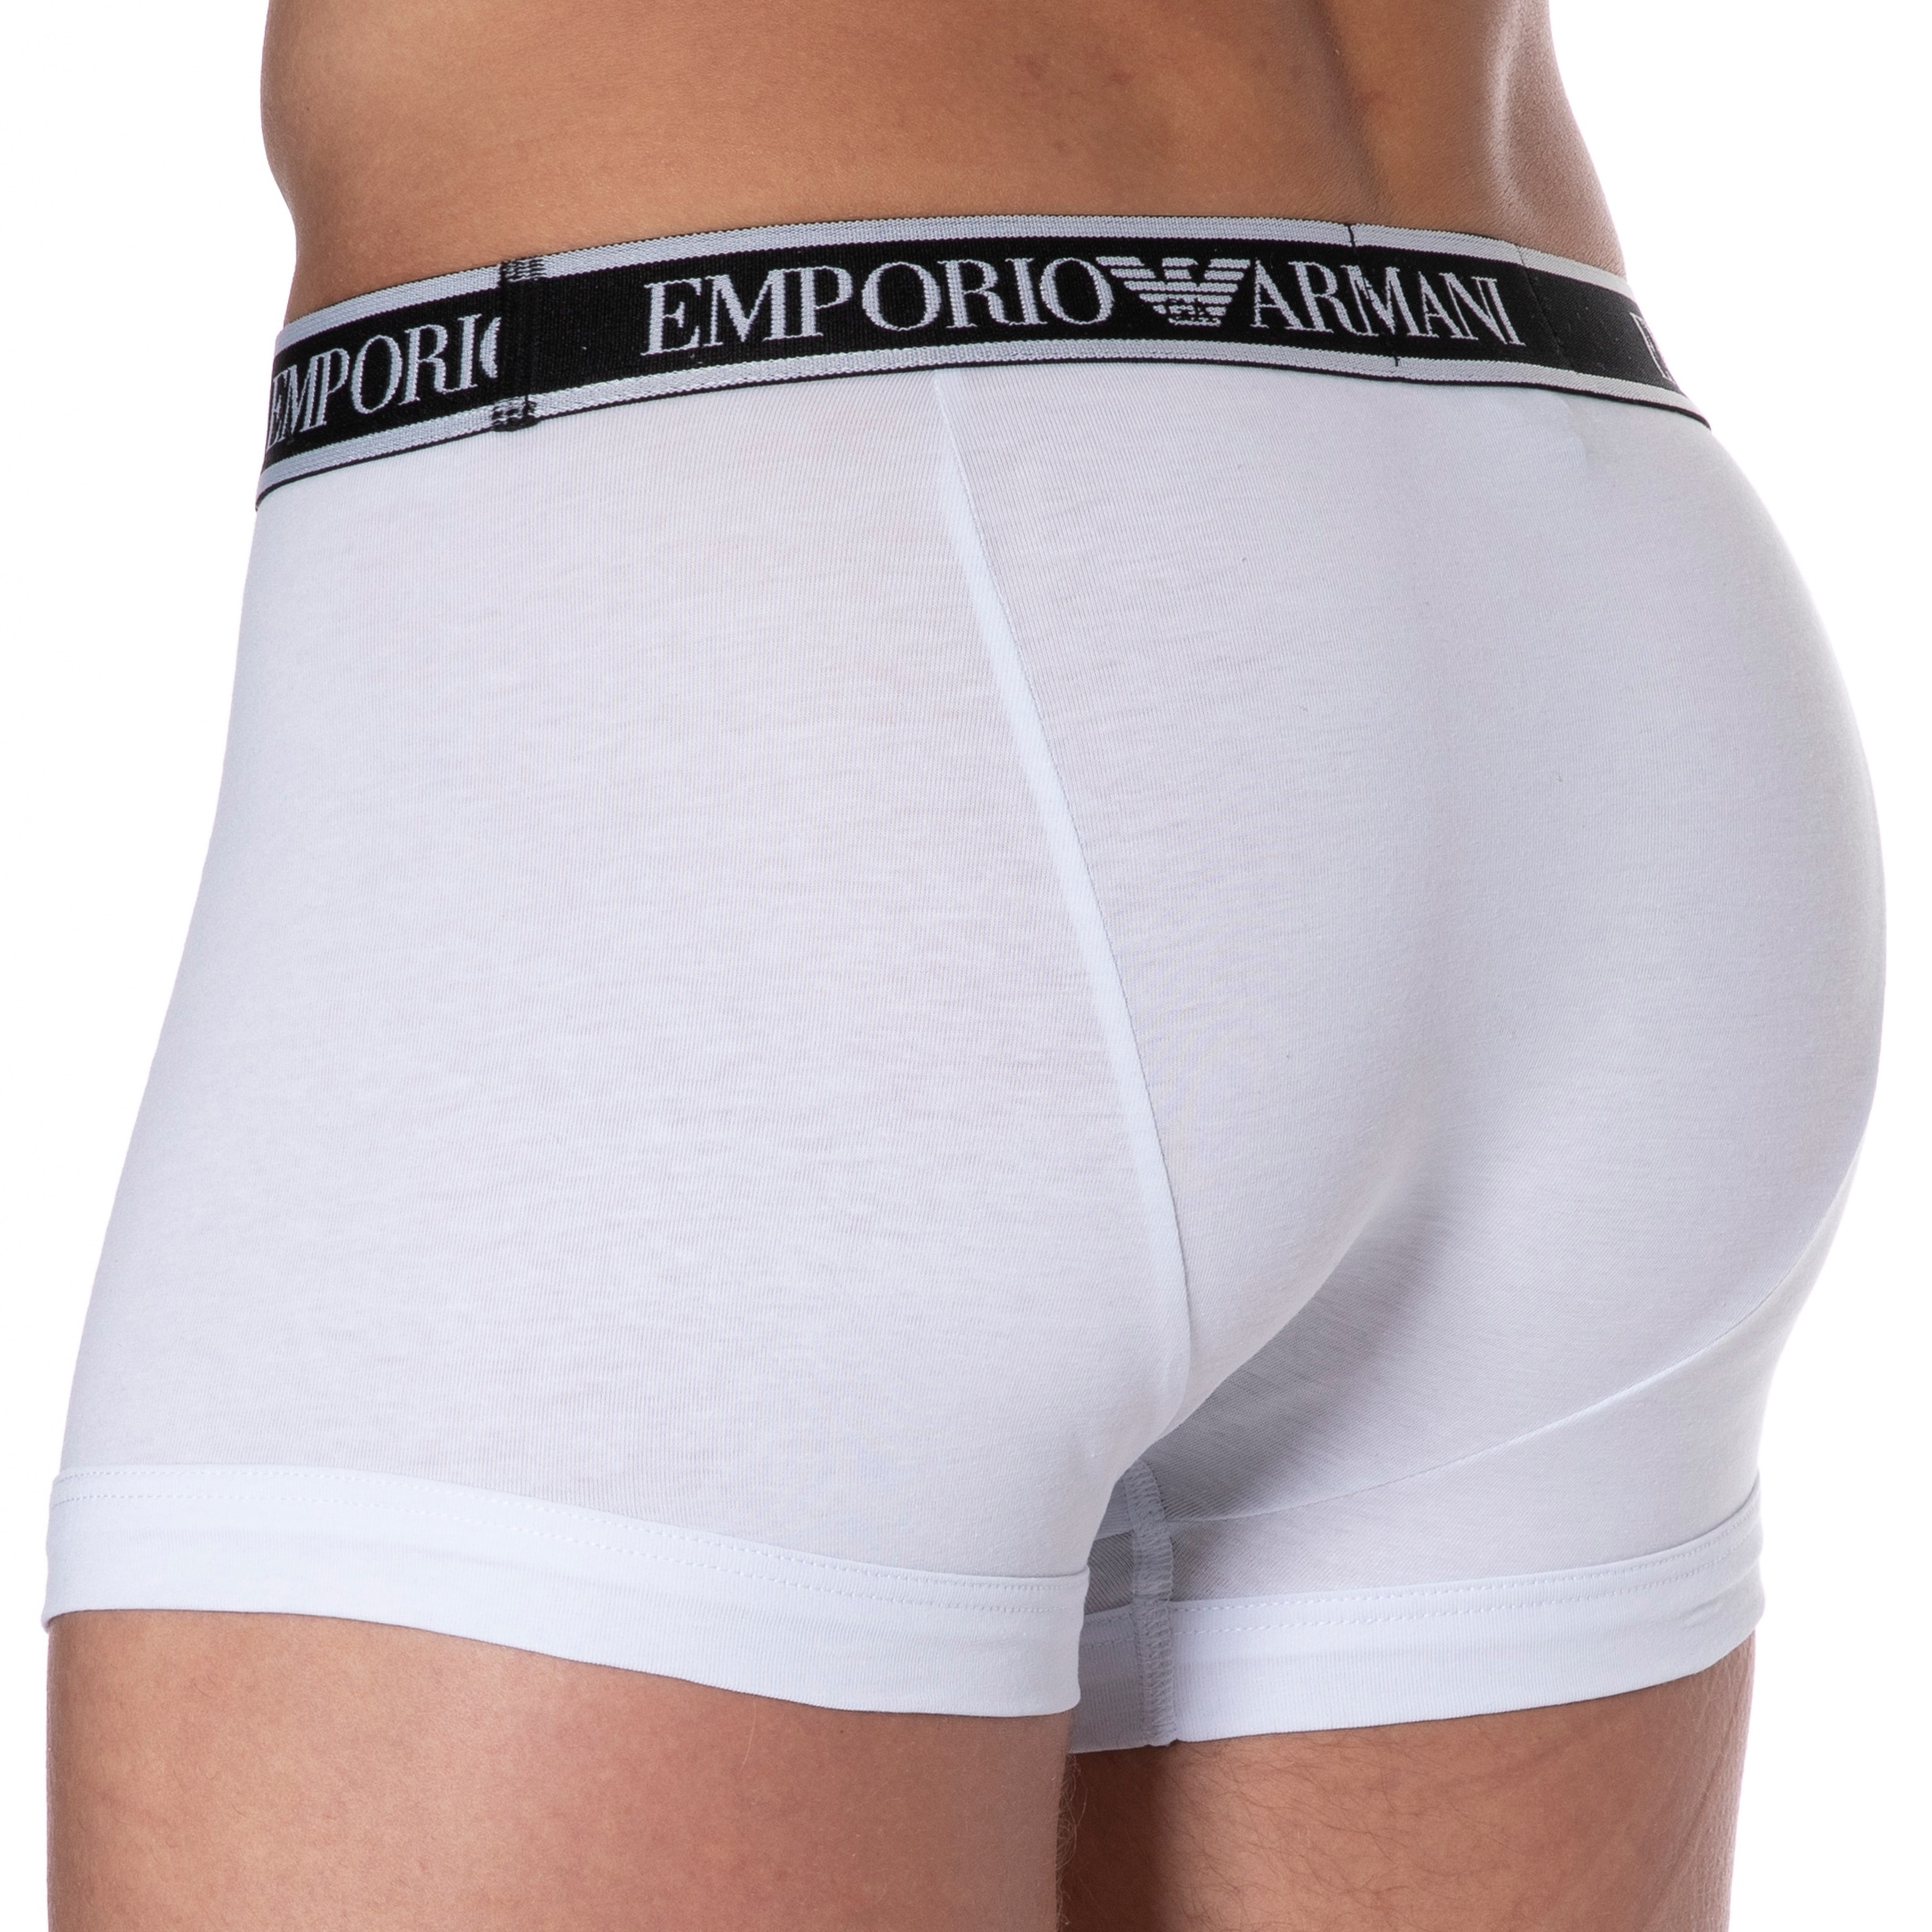 https://www.inderwear.com/157720/core-logoband-cotton-boxers-briefs-white-emporio-armani.jpg